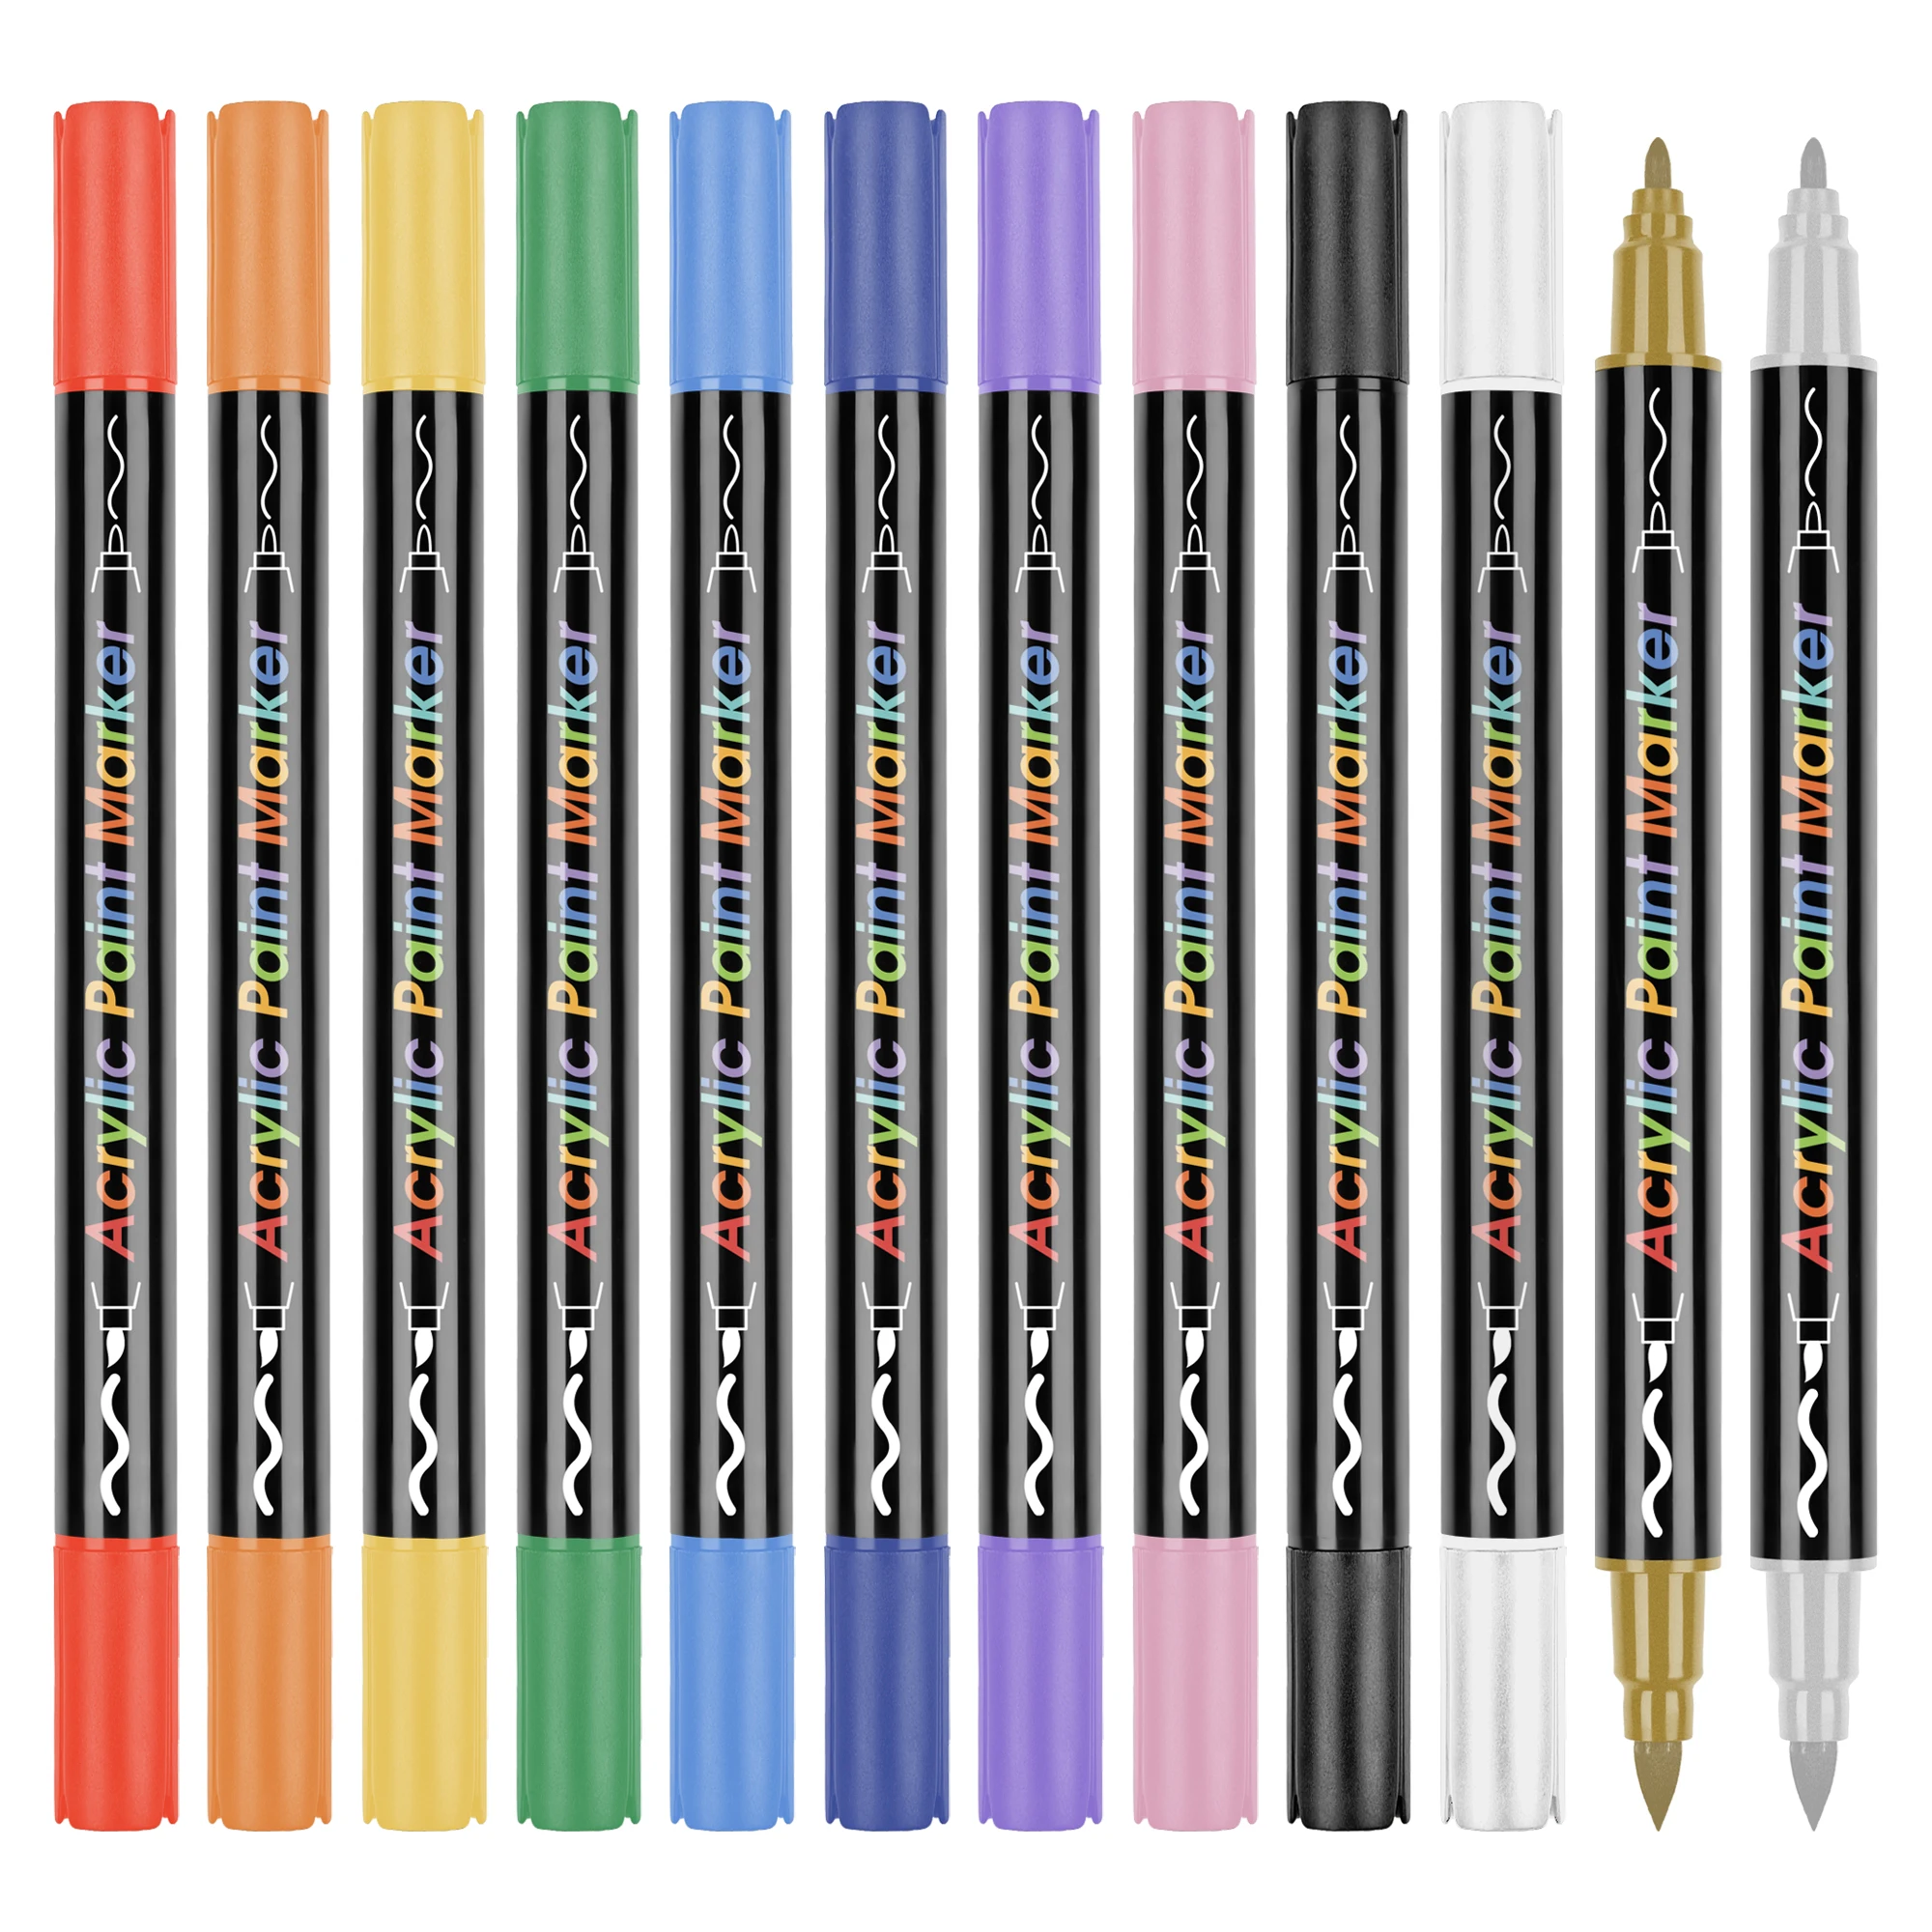 Dual Tip Acrylic Paint Markers Paint Pen, Premium Acrylic Paint Pen for Wood, Canvas, Stone, Rock Painting, Glass, Ceramic Surf